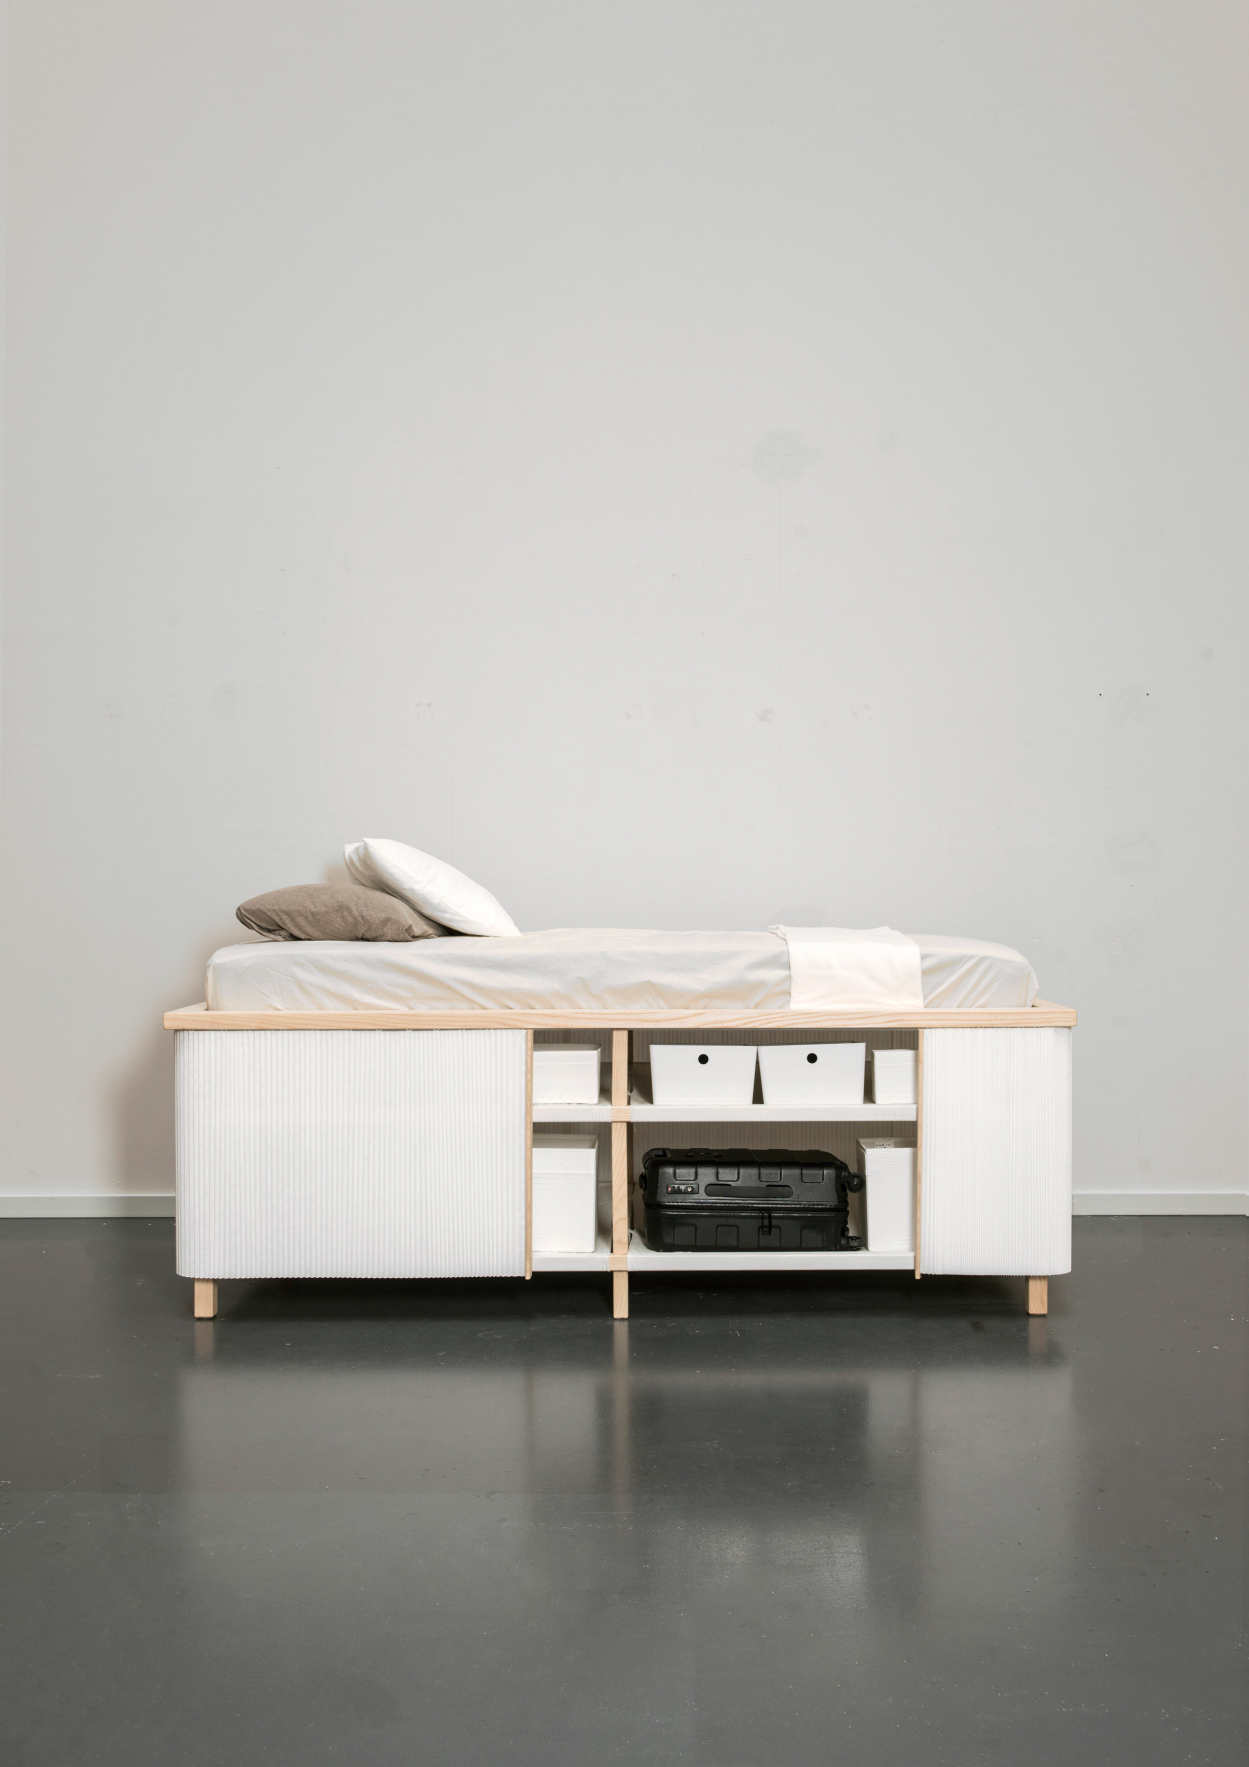 tiny-home-yesul-jang-ecal-graduates-furniture-design_dezeen_2364_col_1